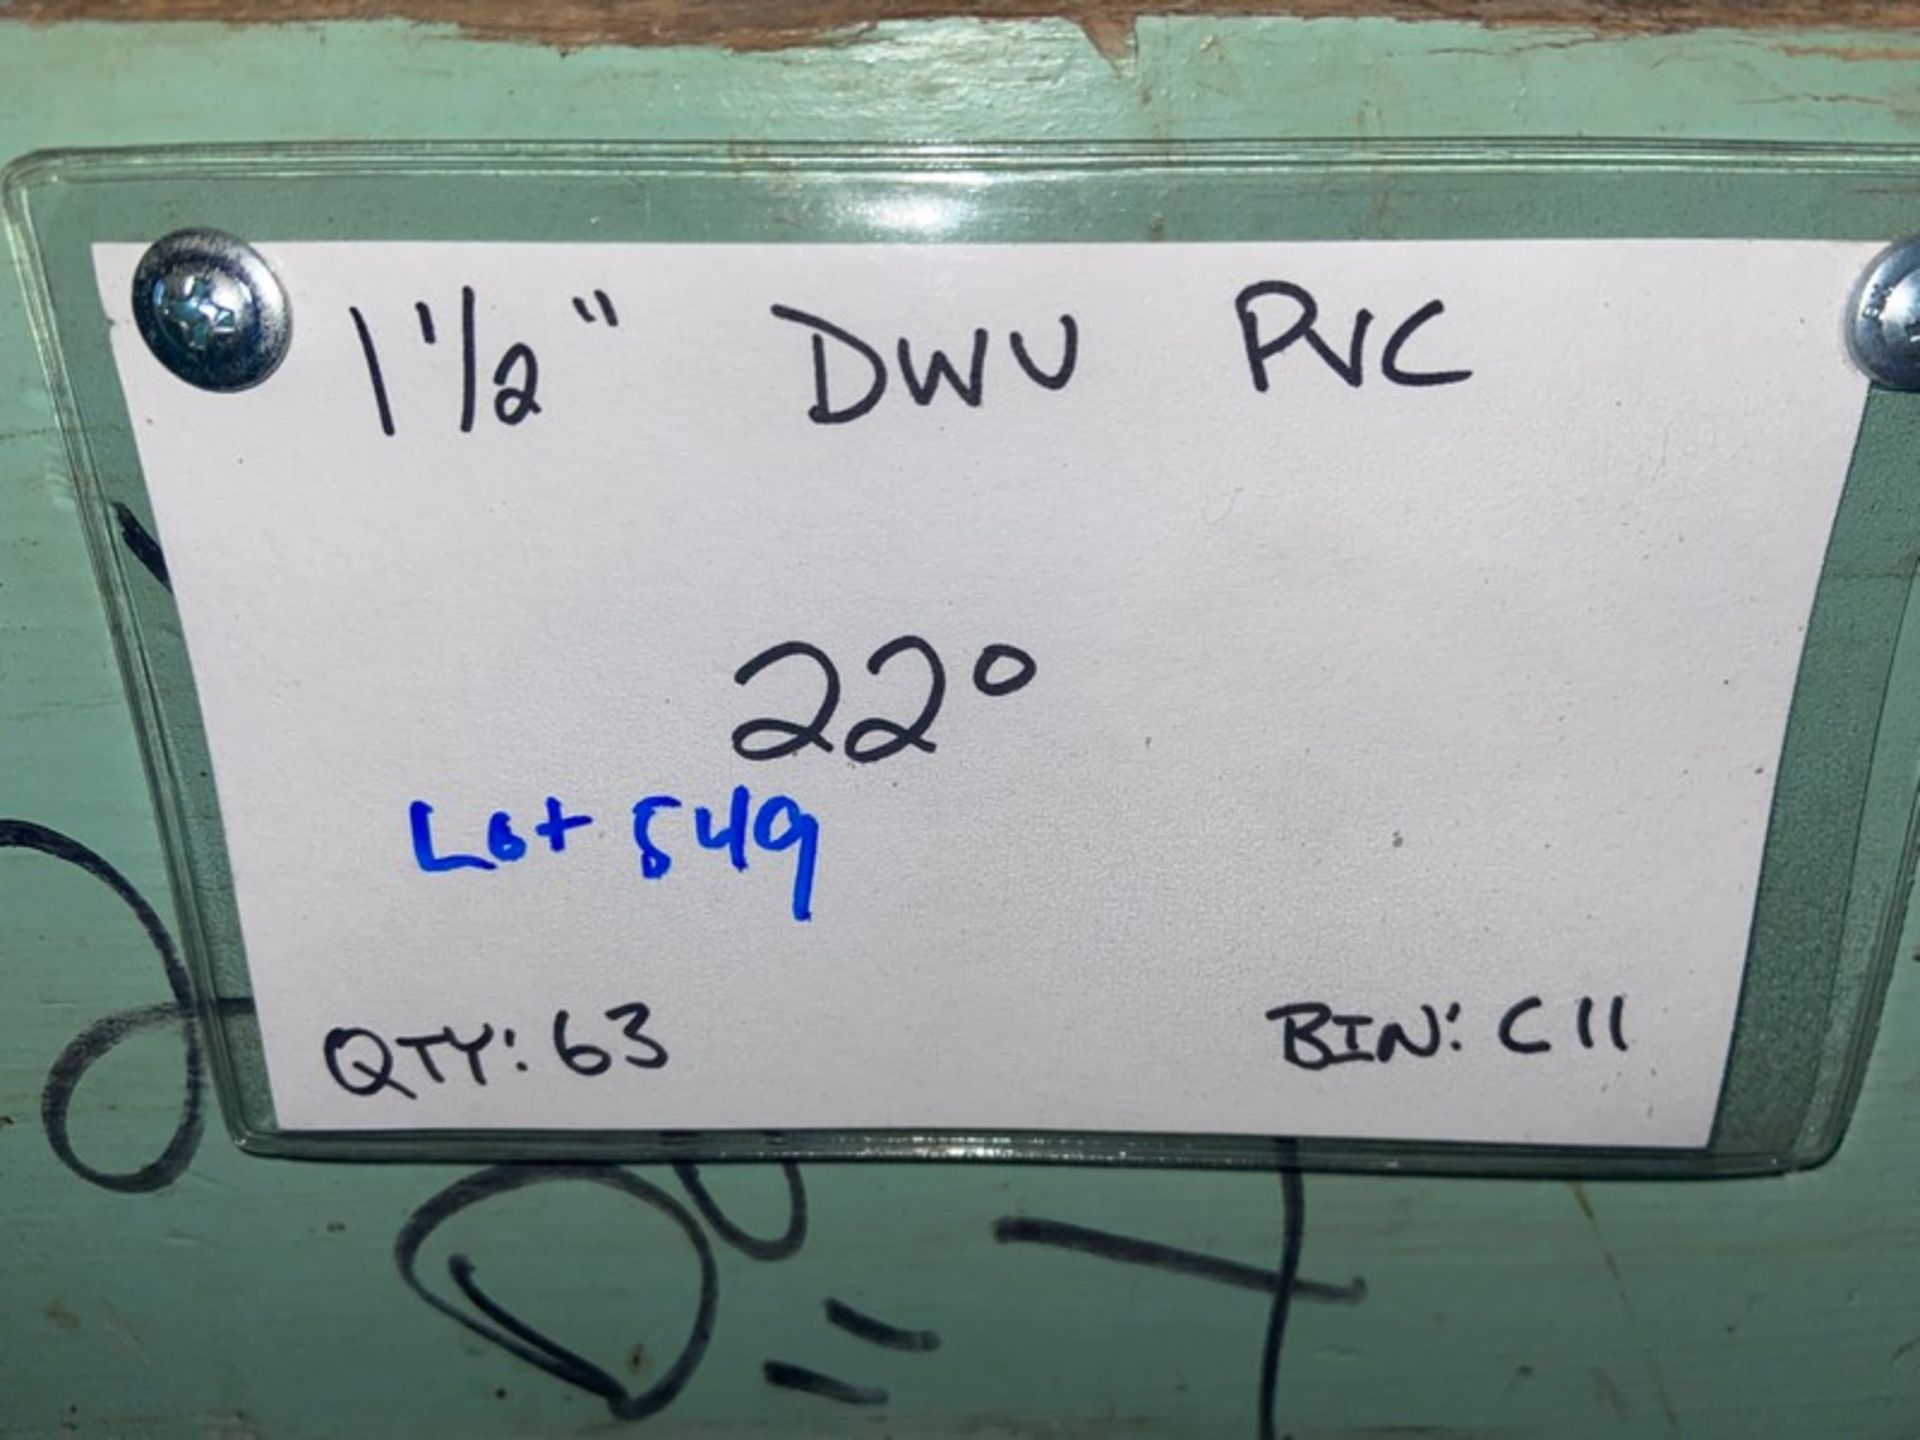 (63) 1 1/2” DWV PVC 22’ (BIN:C11)(LOCATED IN MONROEVILLE, PA) - Image 4 of 4